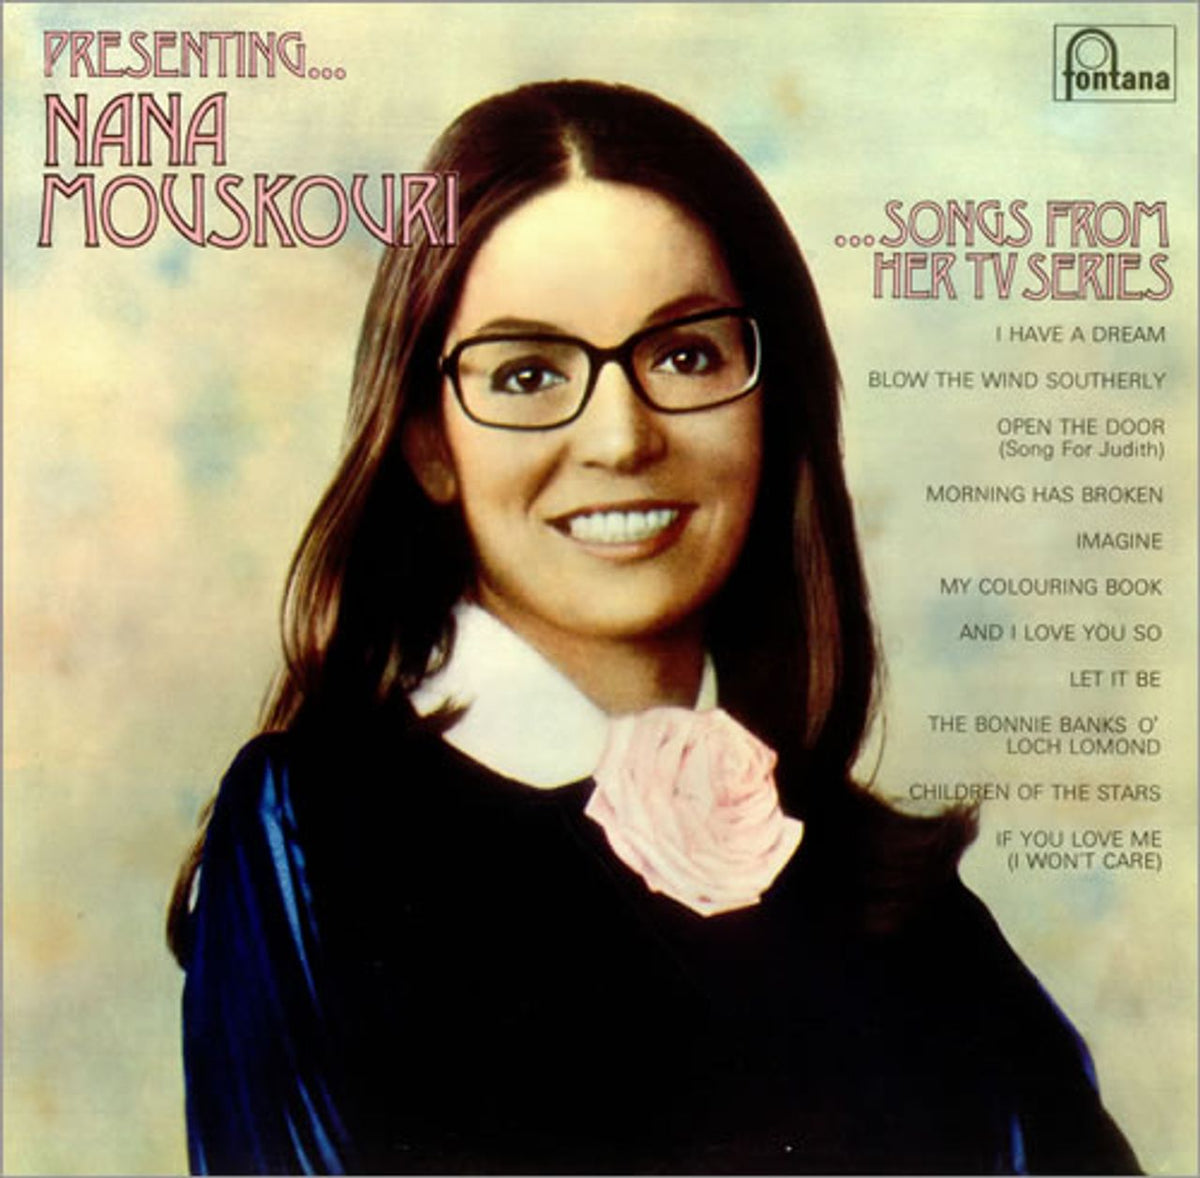 Nana Mouskouri Presenting... Nana Mouskouri - Songs From Her TV